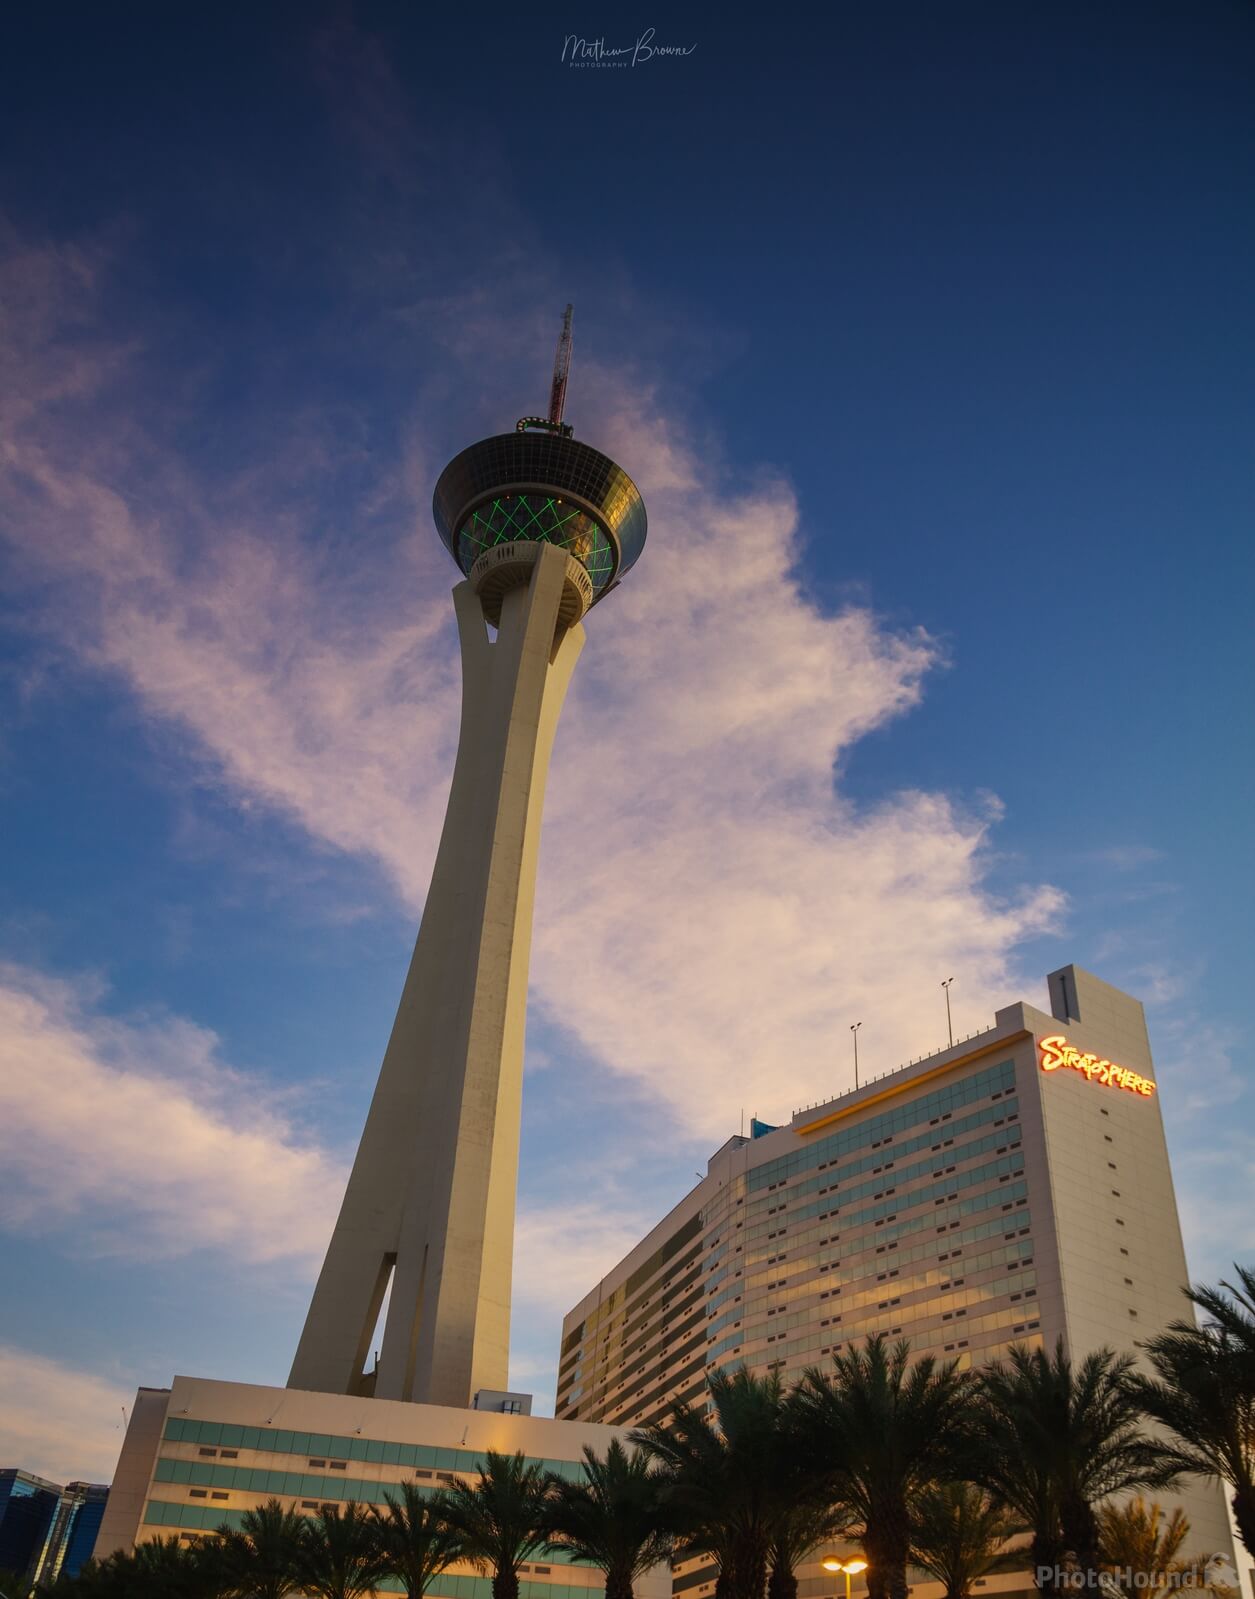 Image of Stratosphere Las Vegas by Mathew Browne